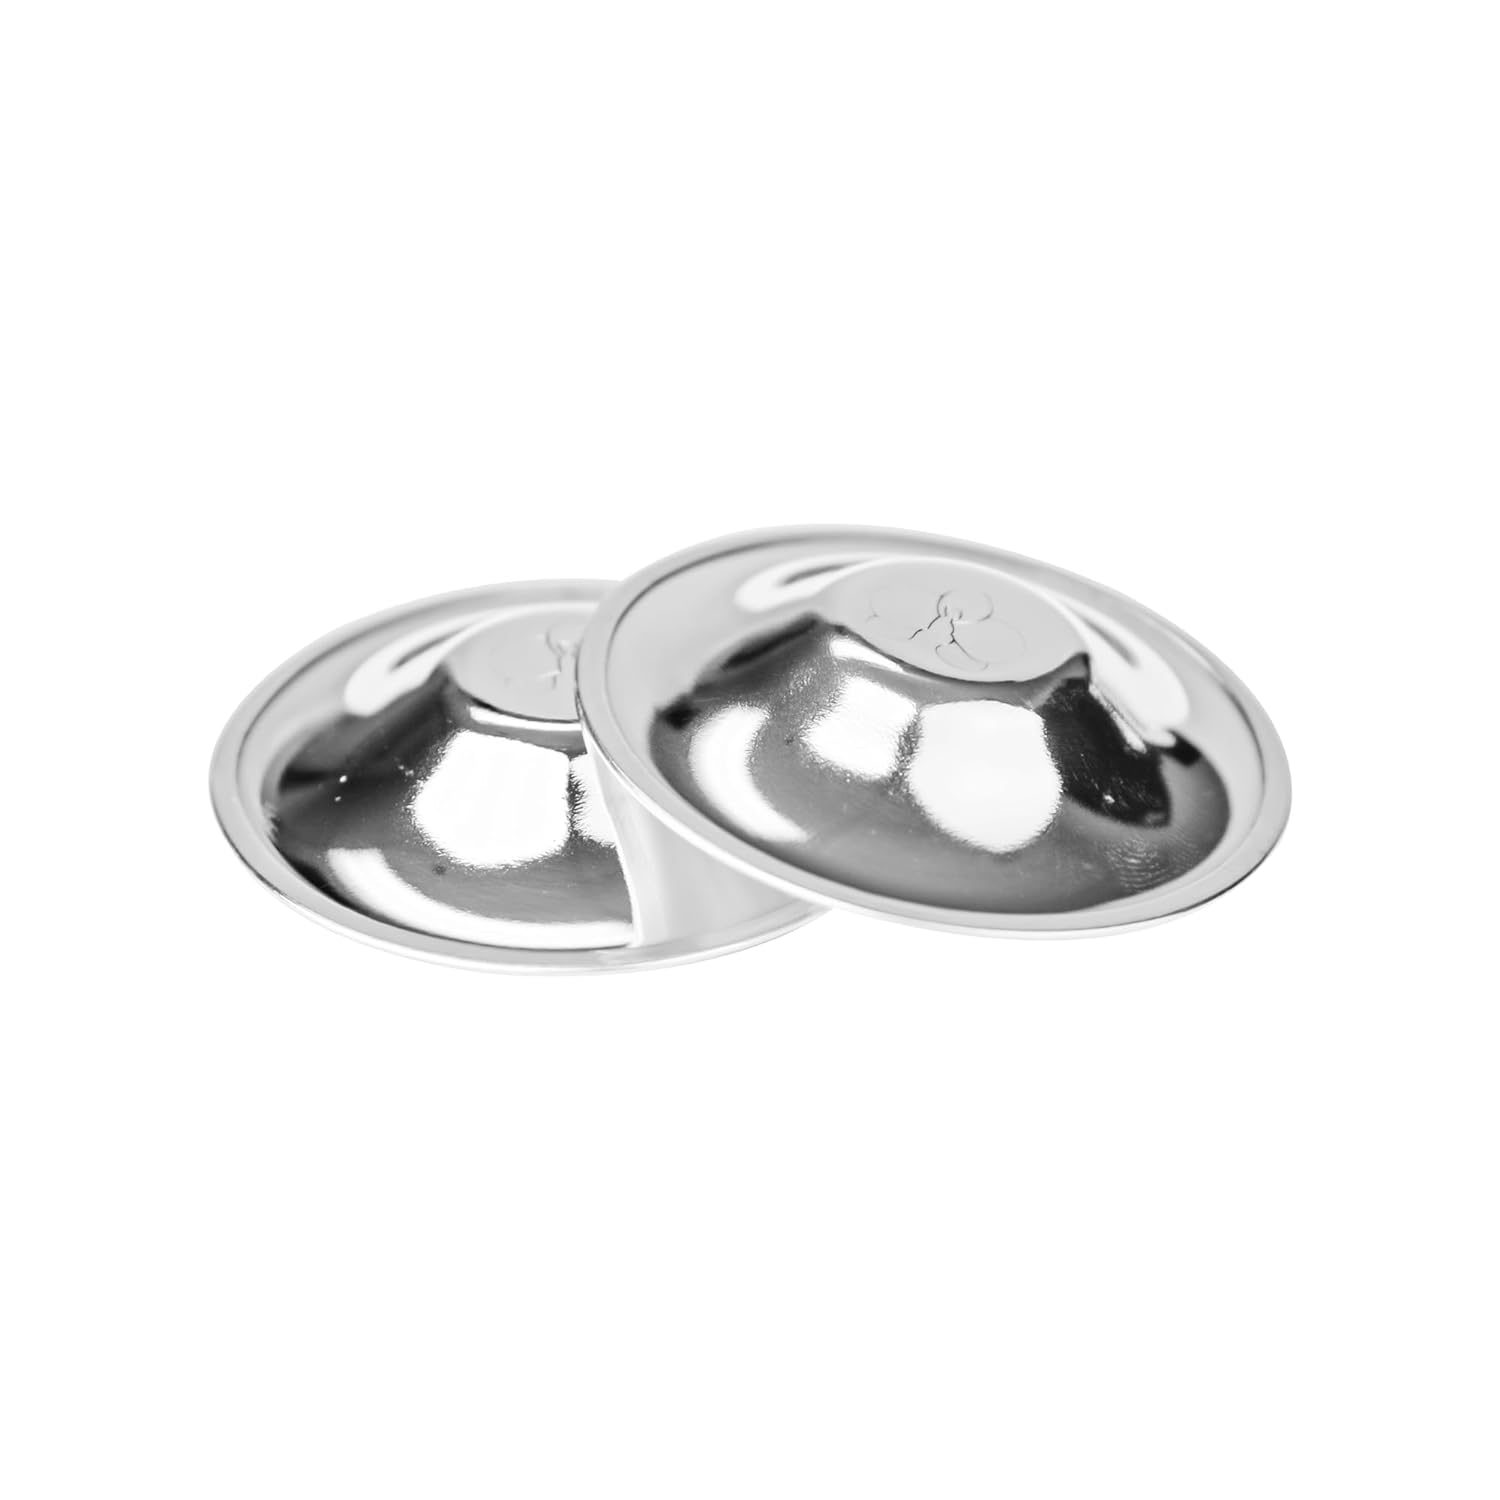 camelcamelcamel - Nipple Shields for Nursing Newborn, Silver